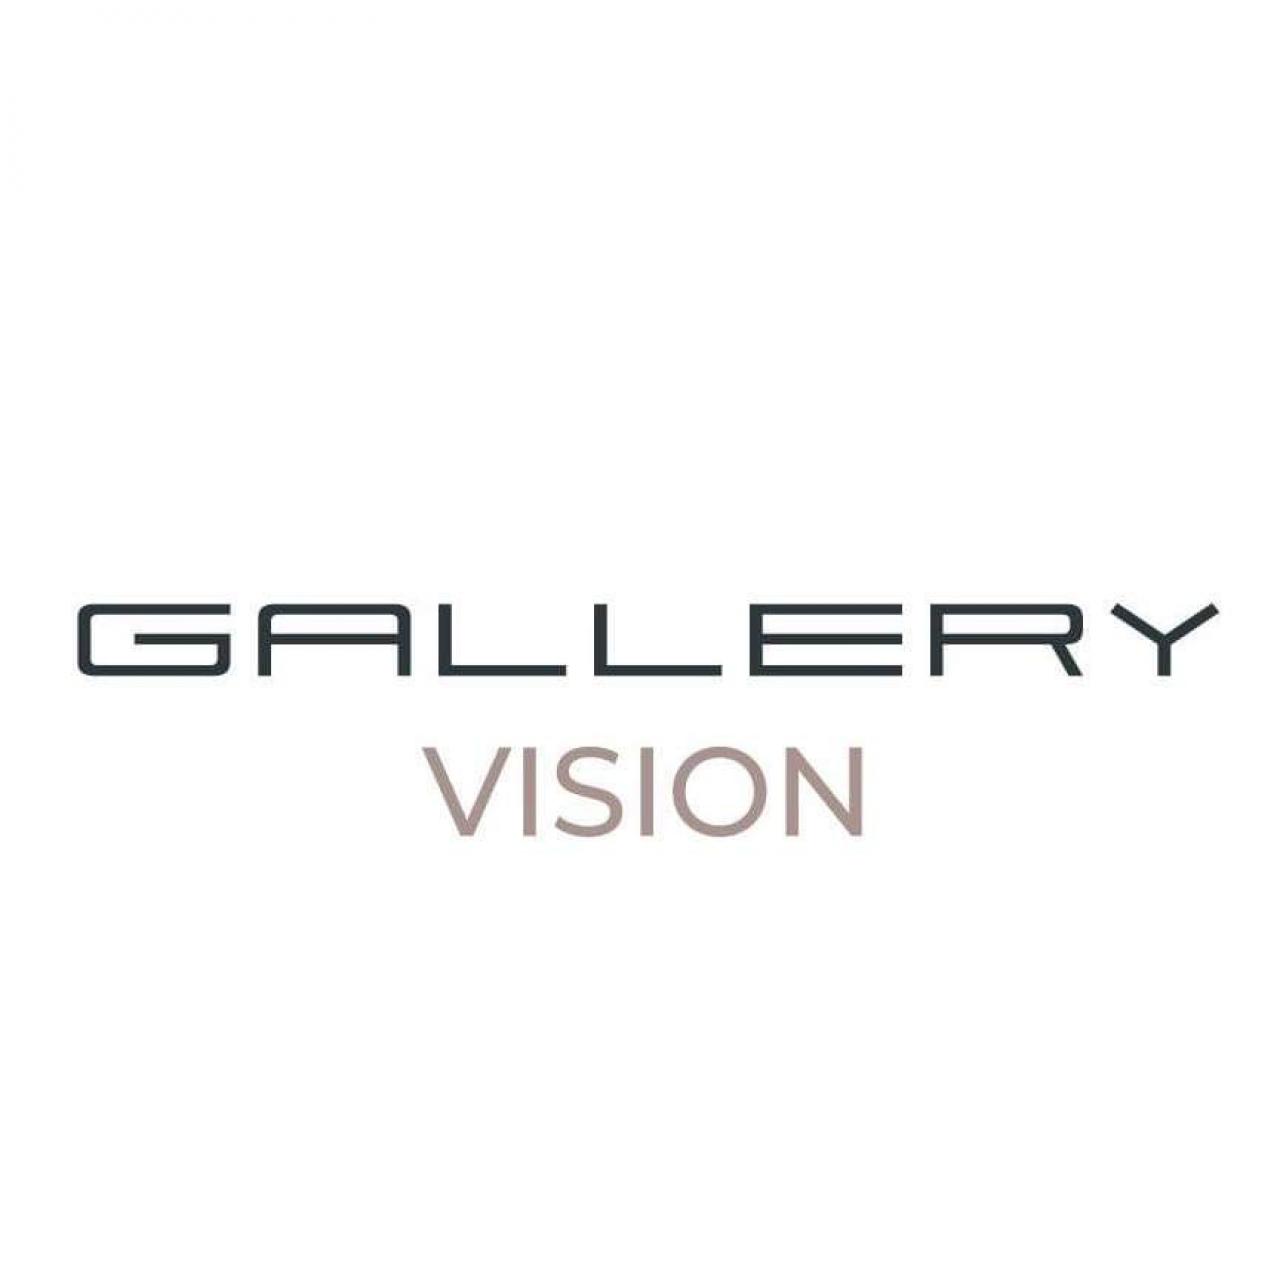 Gallery Vision - Angels Optics